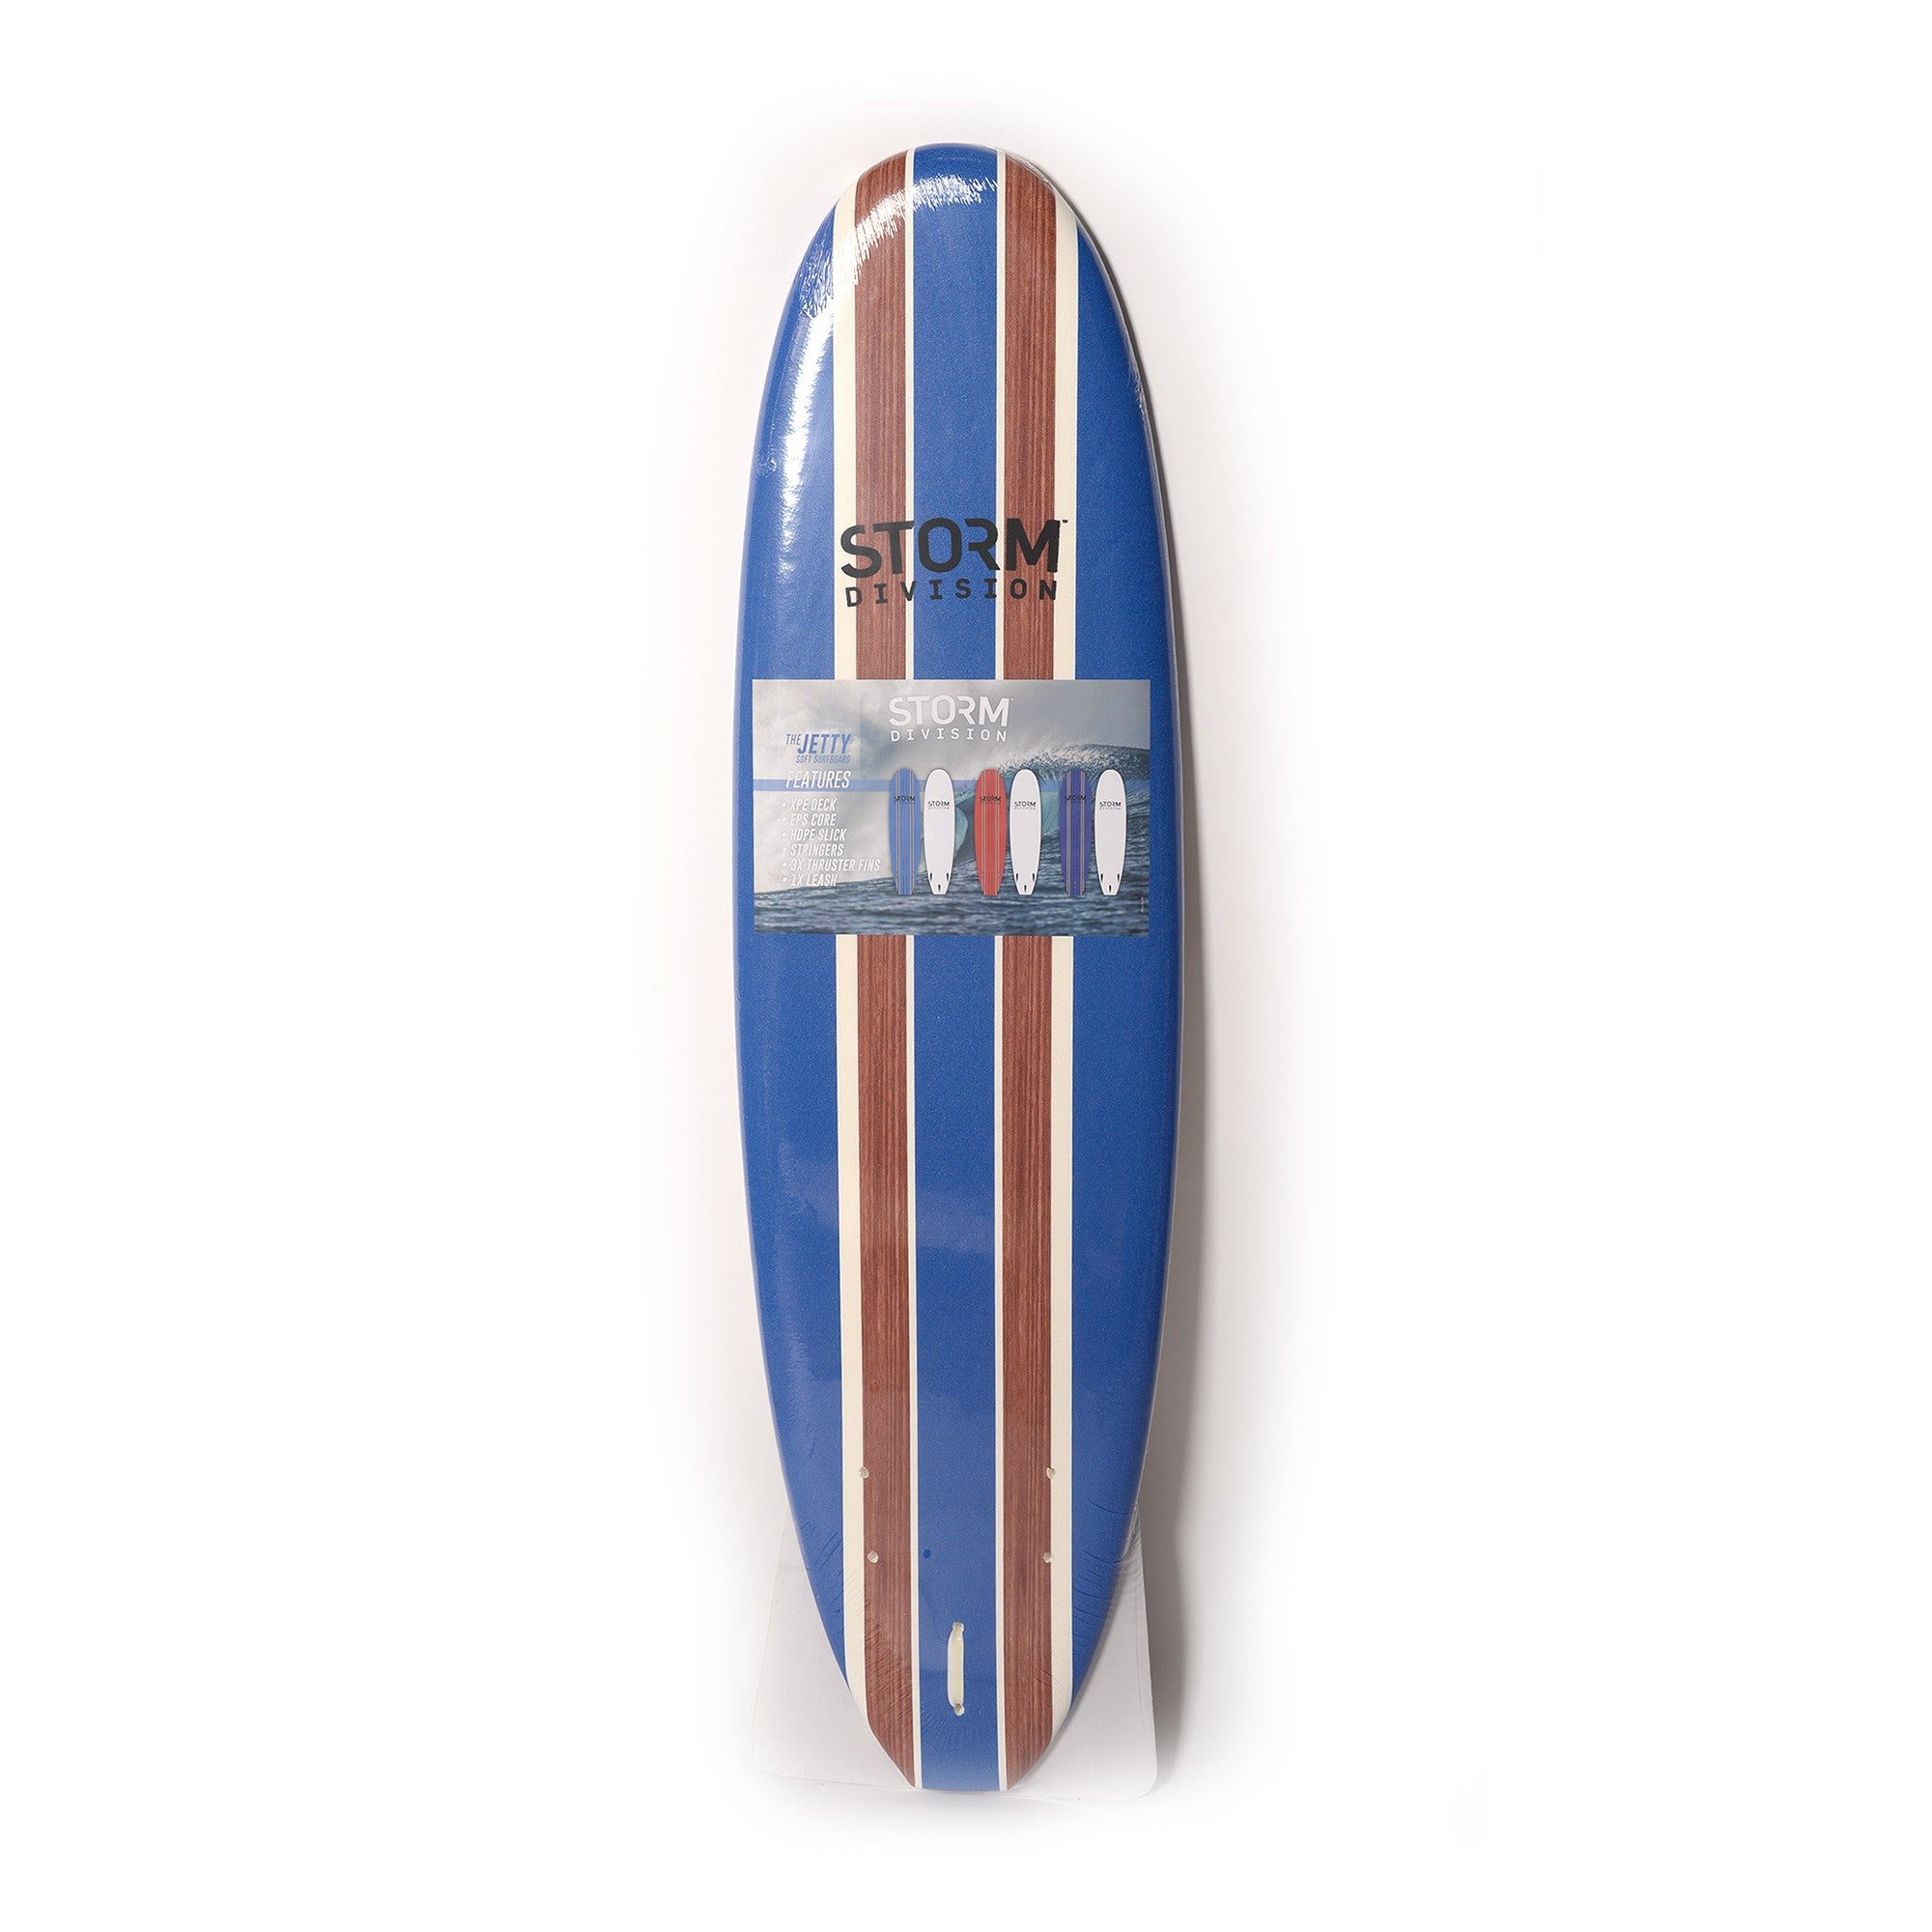 STORM DIVISION - Jetty Softboard - Tabla de surf de espuma - 6'2 - Azul oscuro